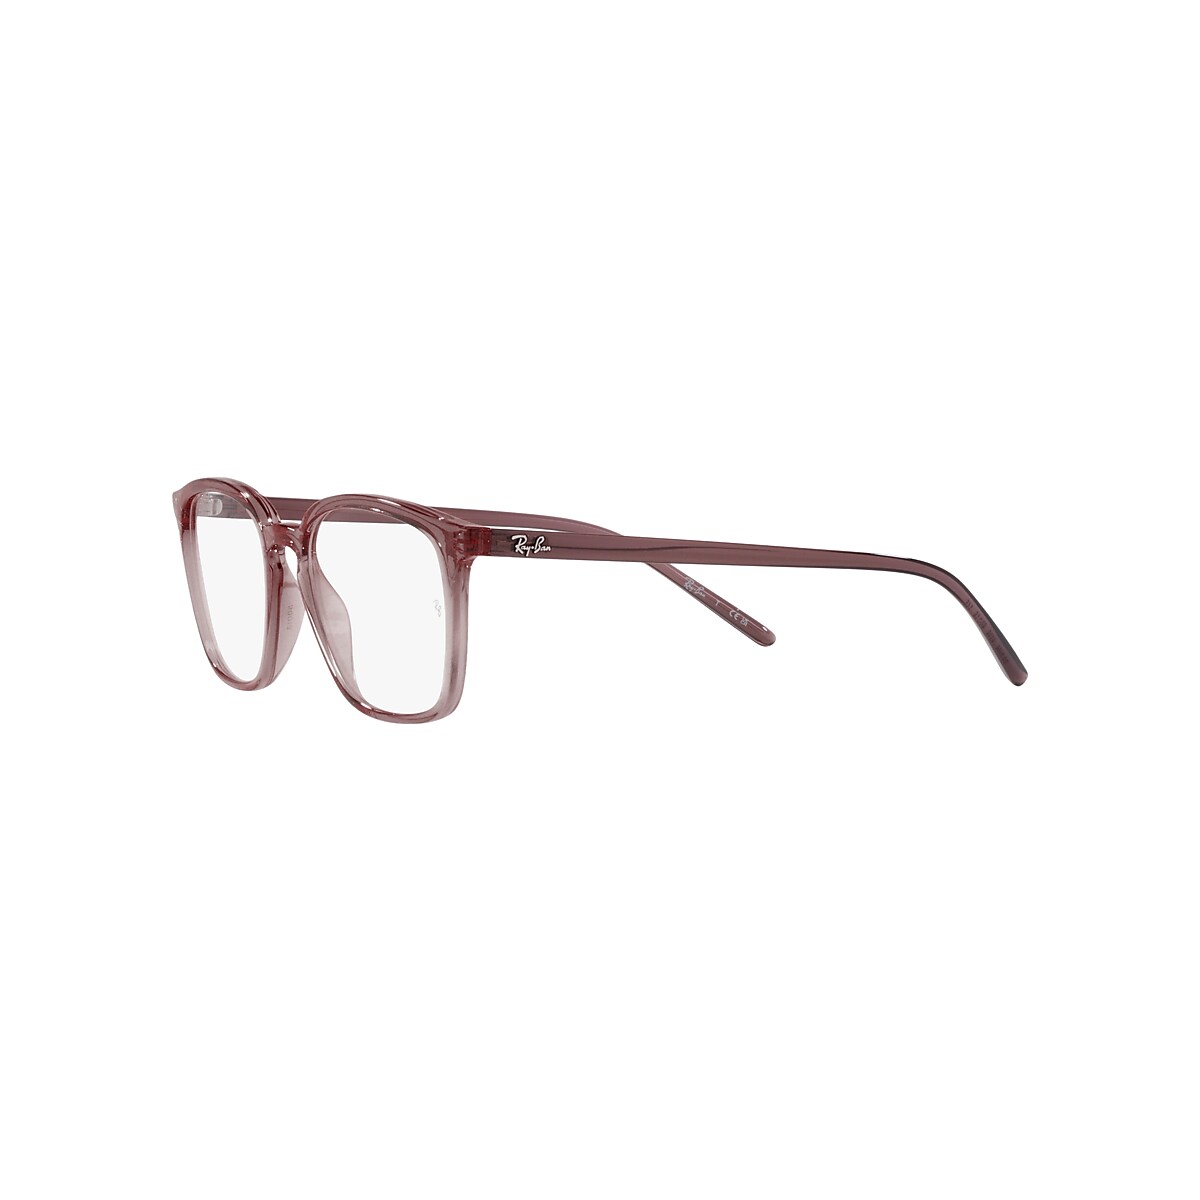 RB7185 OPTICS Eyeglasses with Transparent Brown Frame - RB7185F 